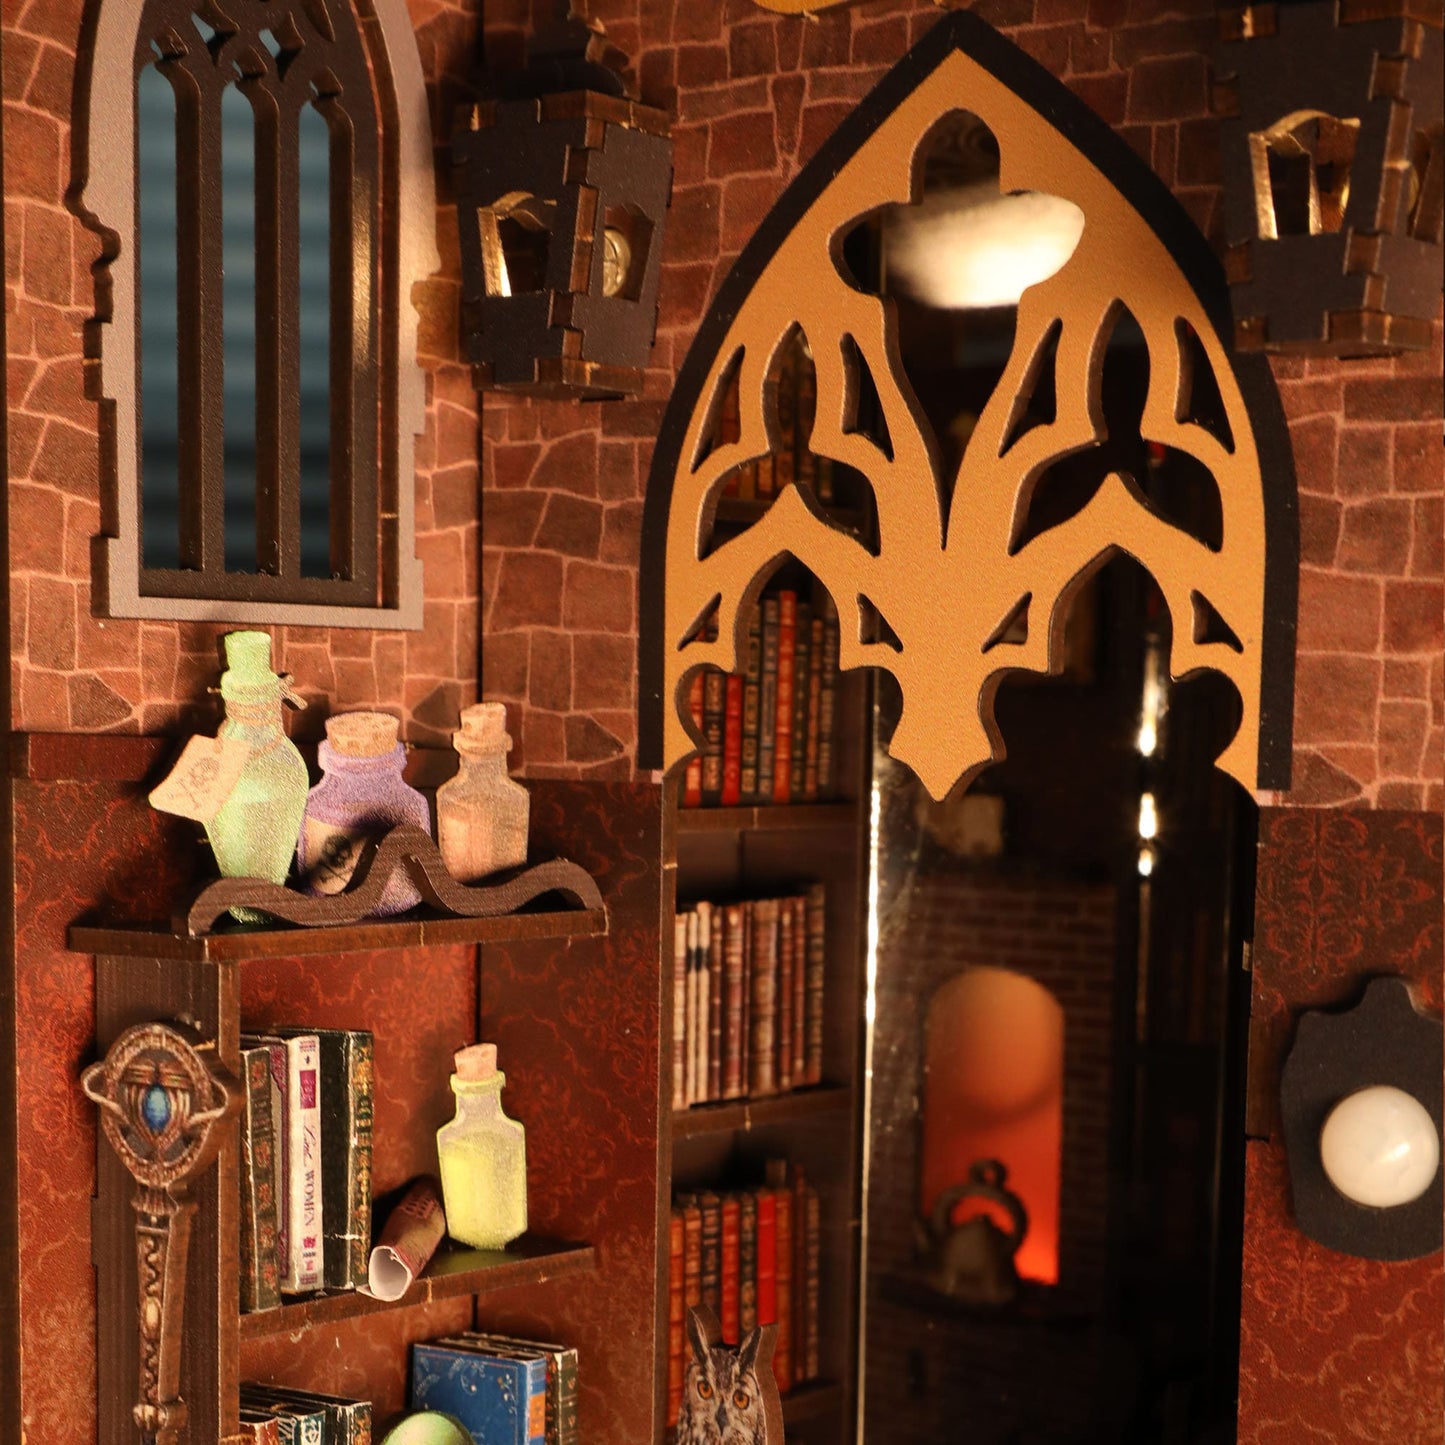 Magic Library DIY Book Nook 3D Wooden Puzzle